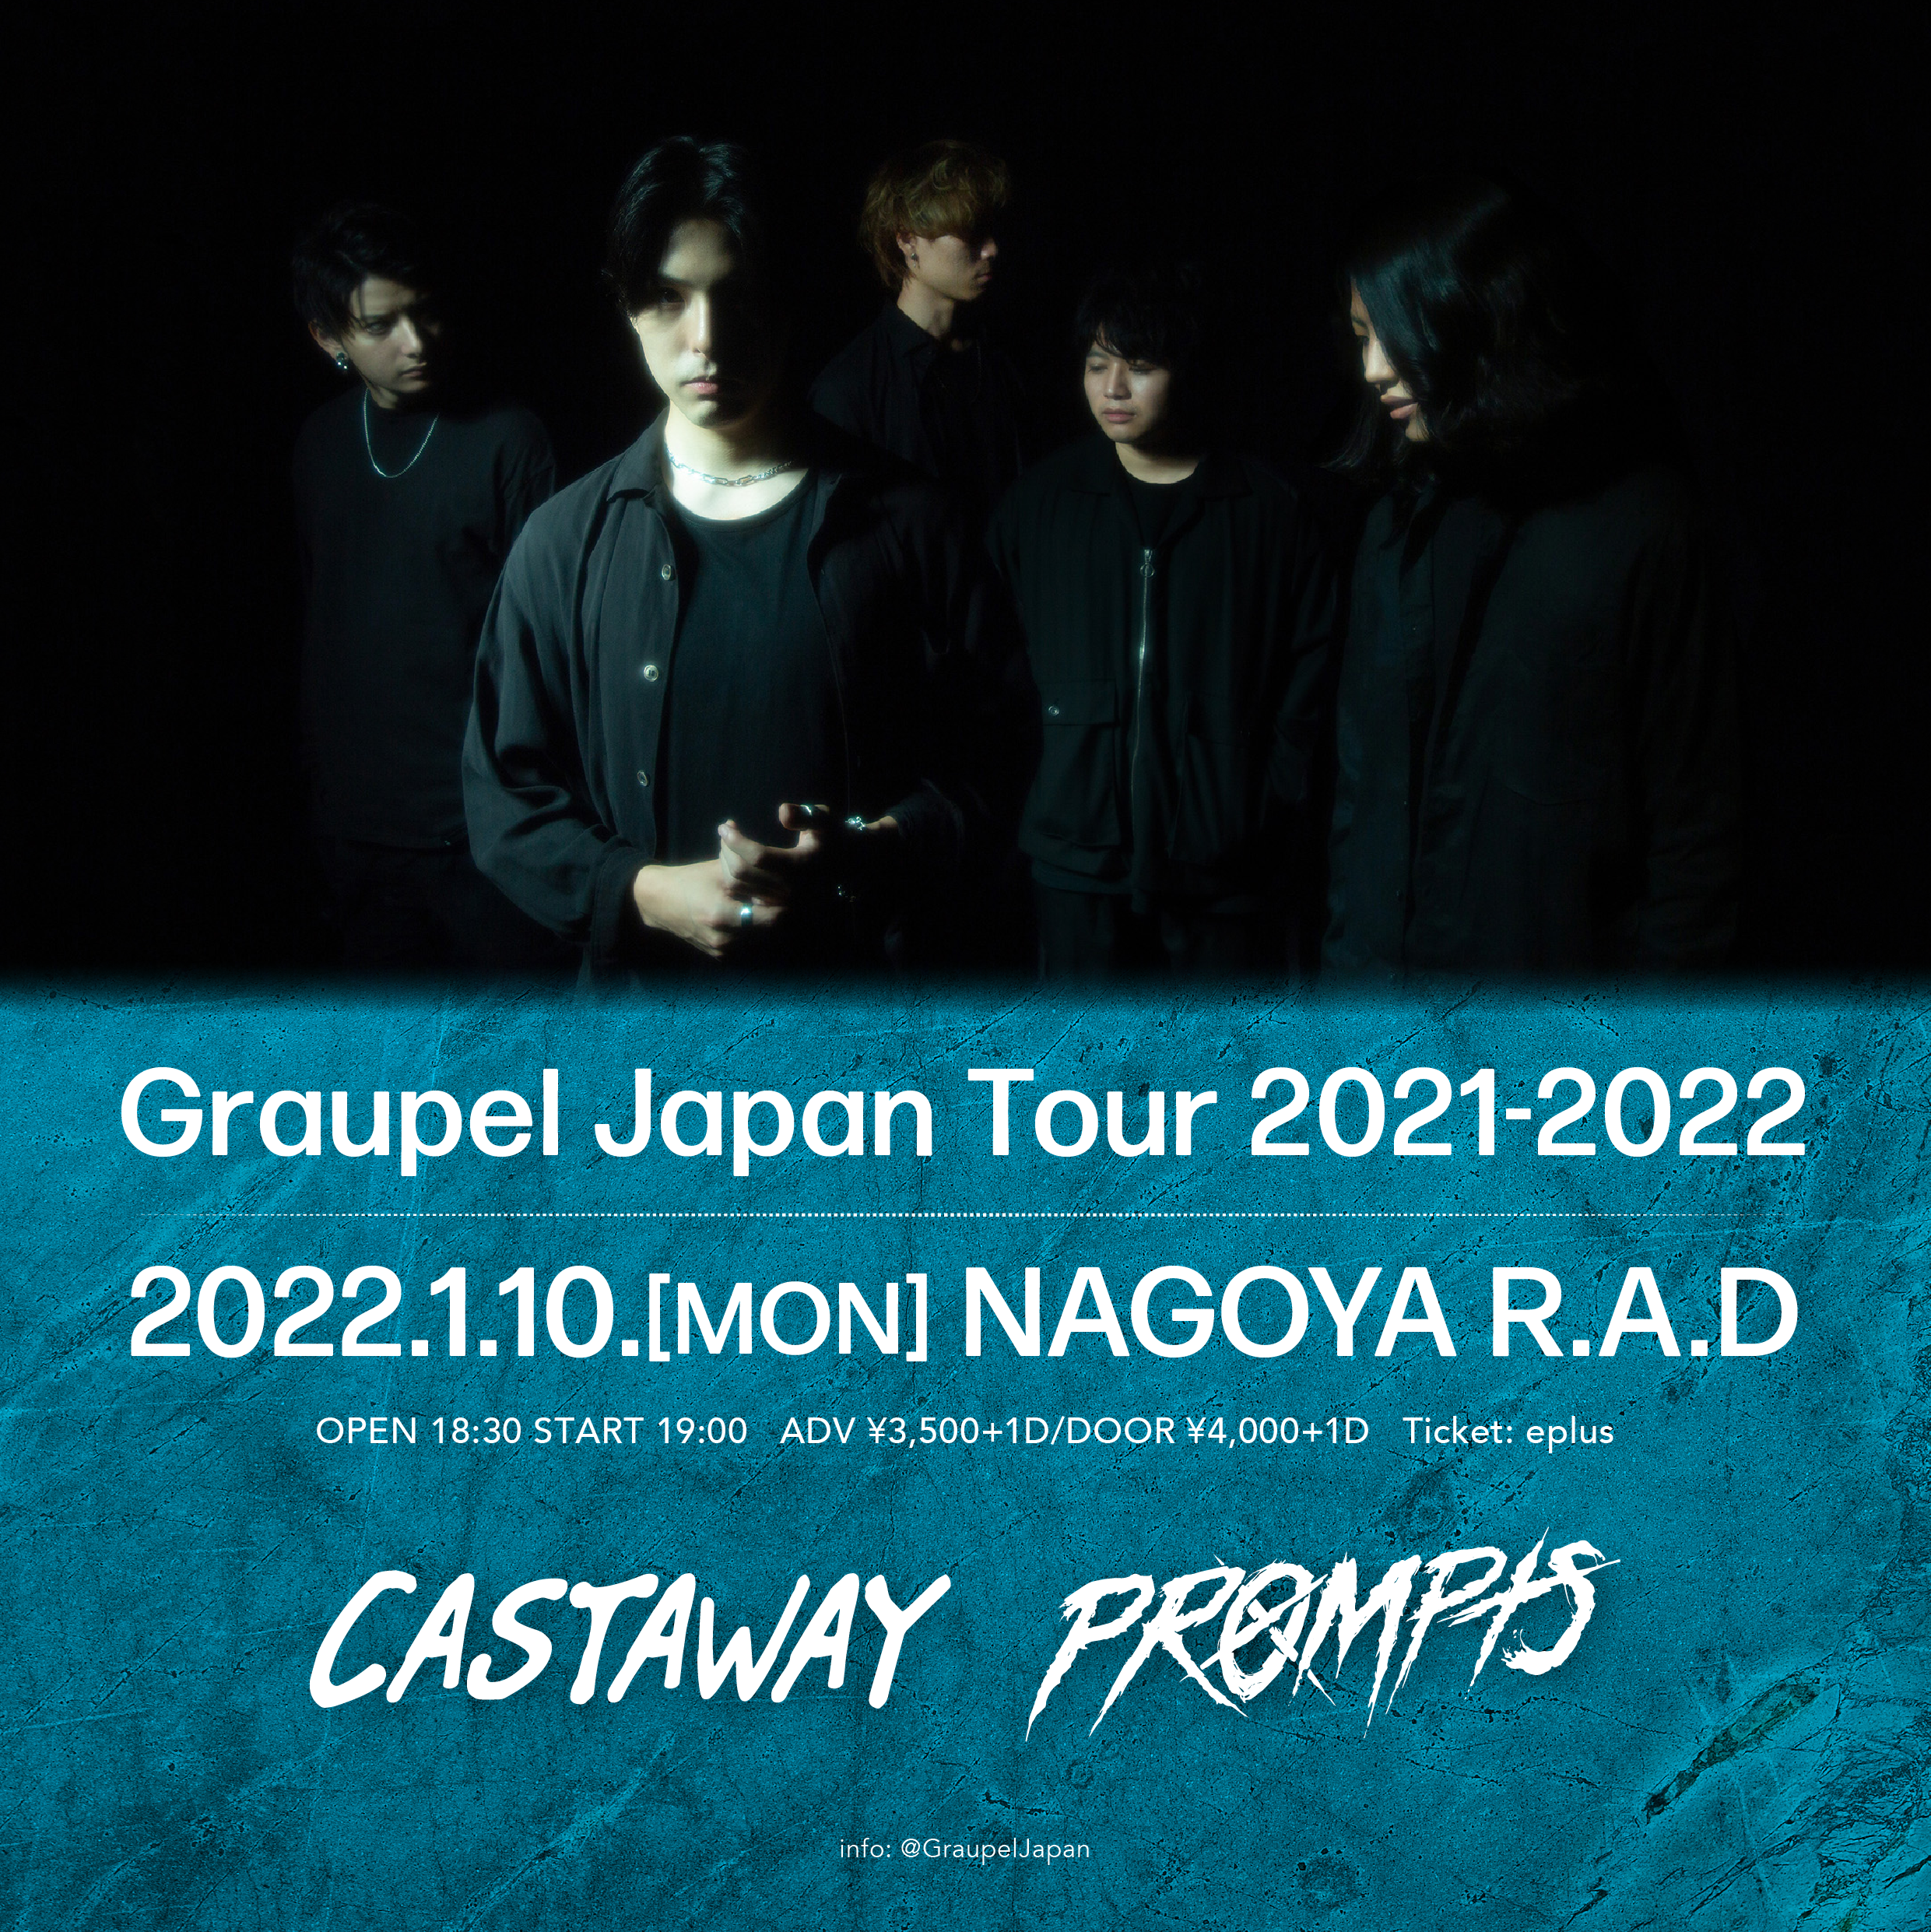 Graupel Japan Tour 2021-2022